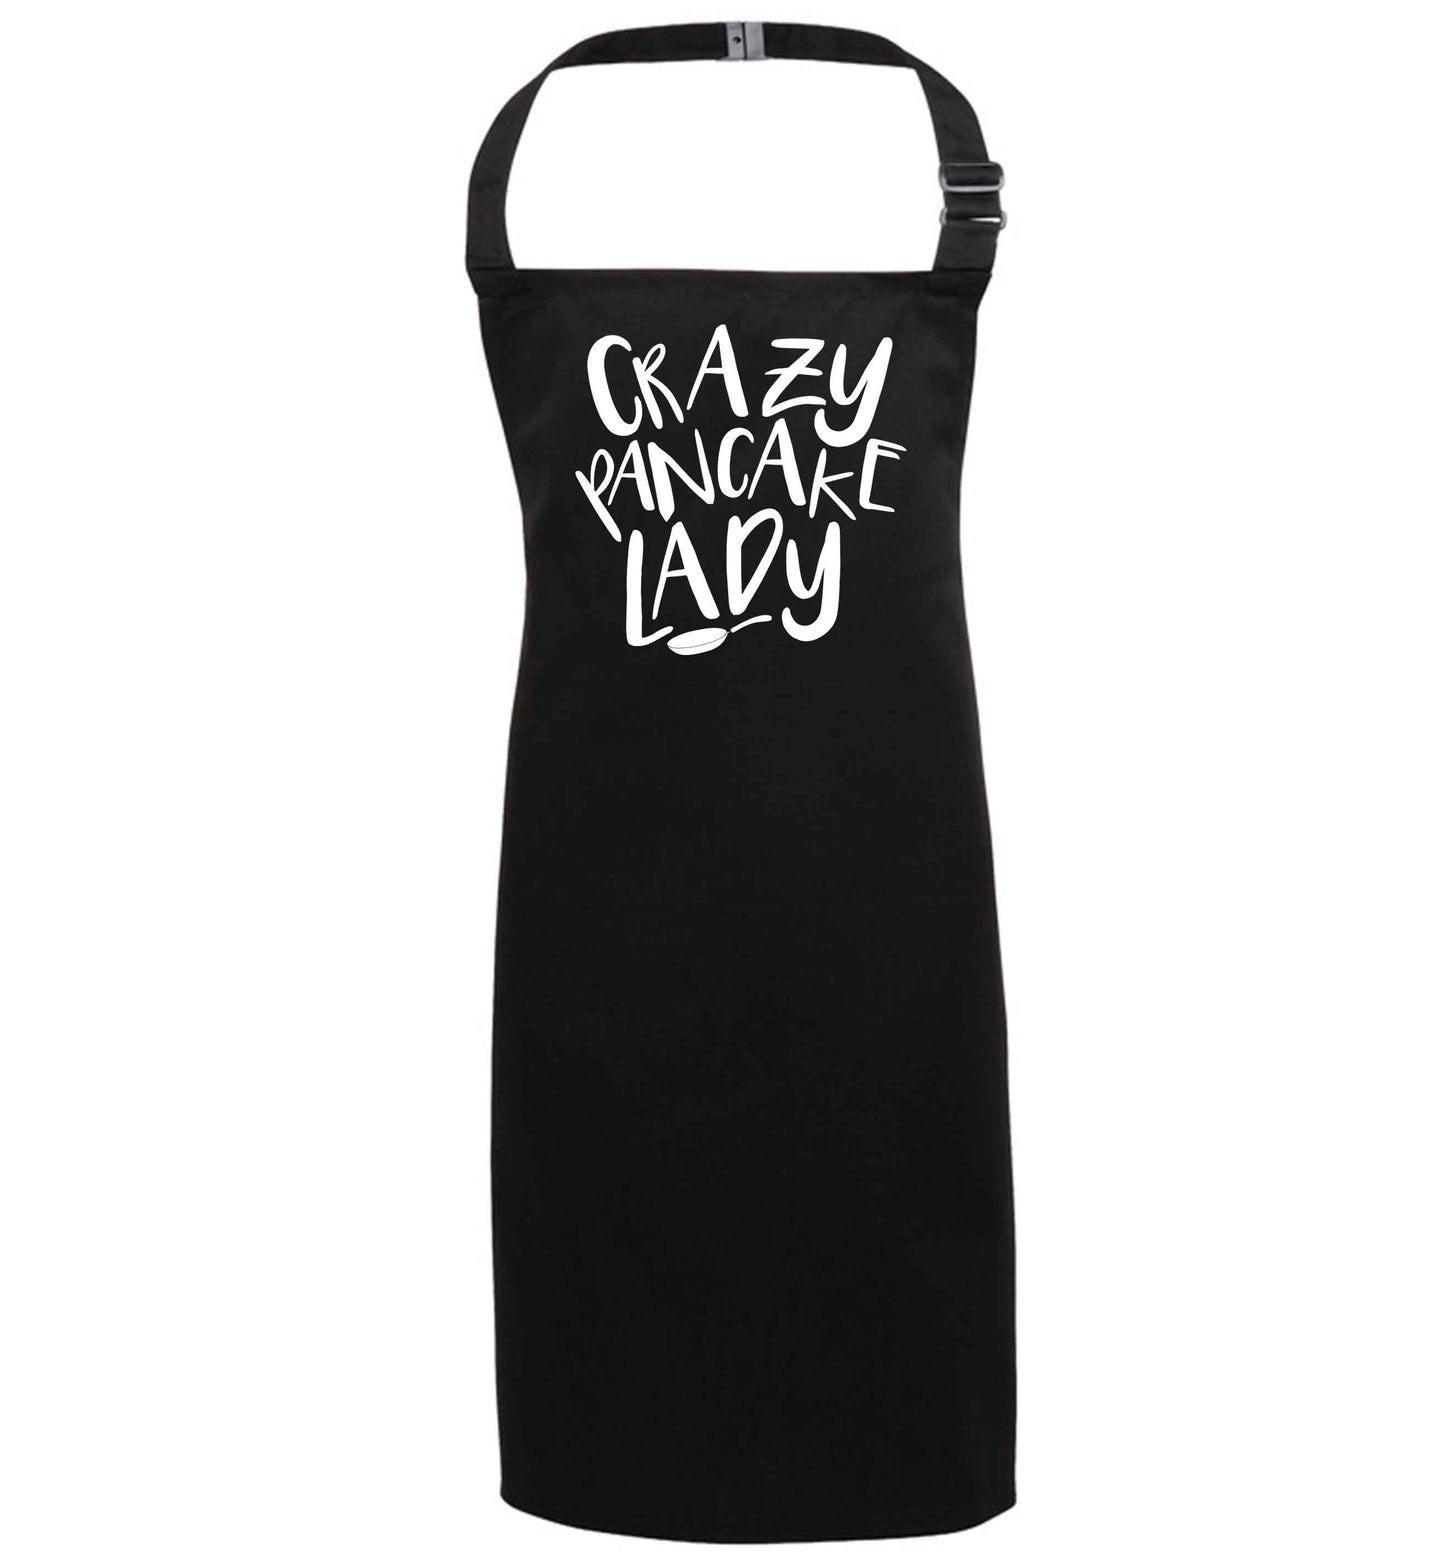 Crazy pancake lady black apron 7-10 years